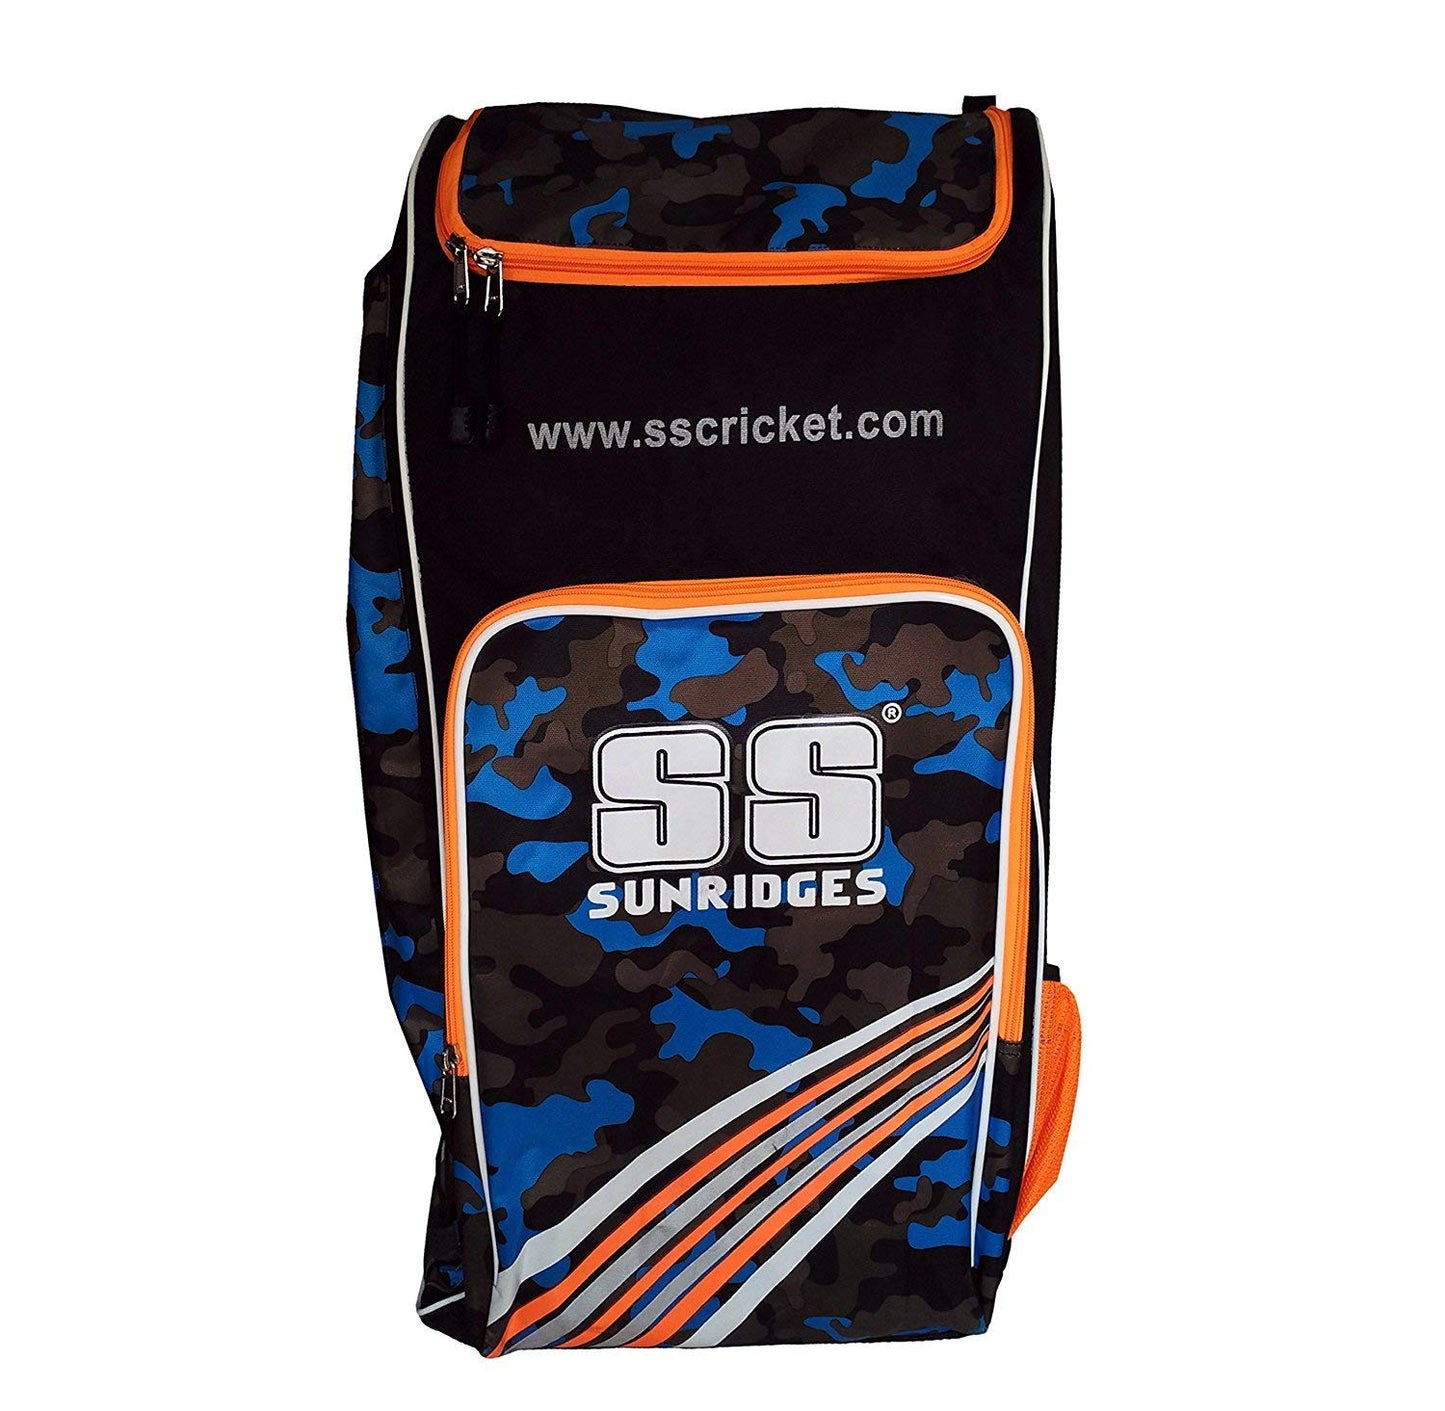 SS Cricket Kit Bag - Colt Army Blue - Best Price online Prokicksports.com